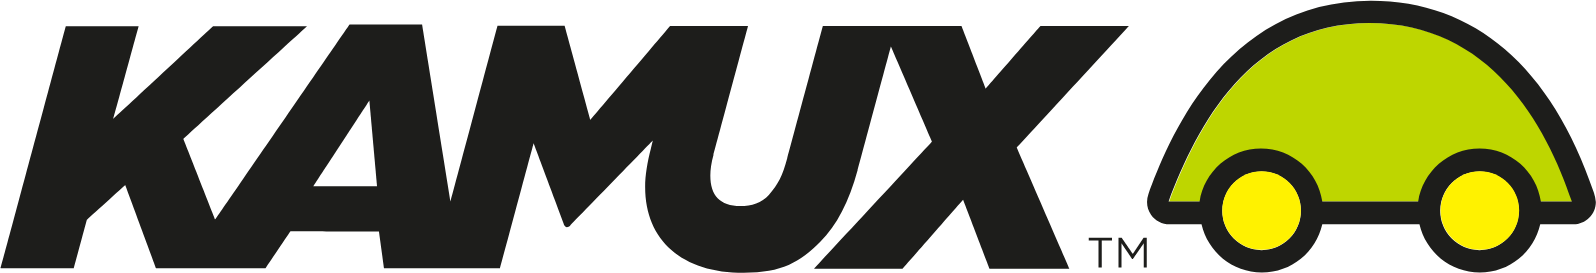 Kamux logo large (transparent PNG)